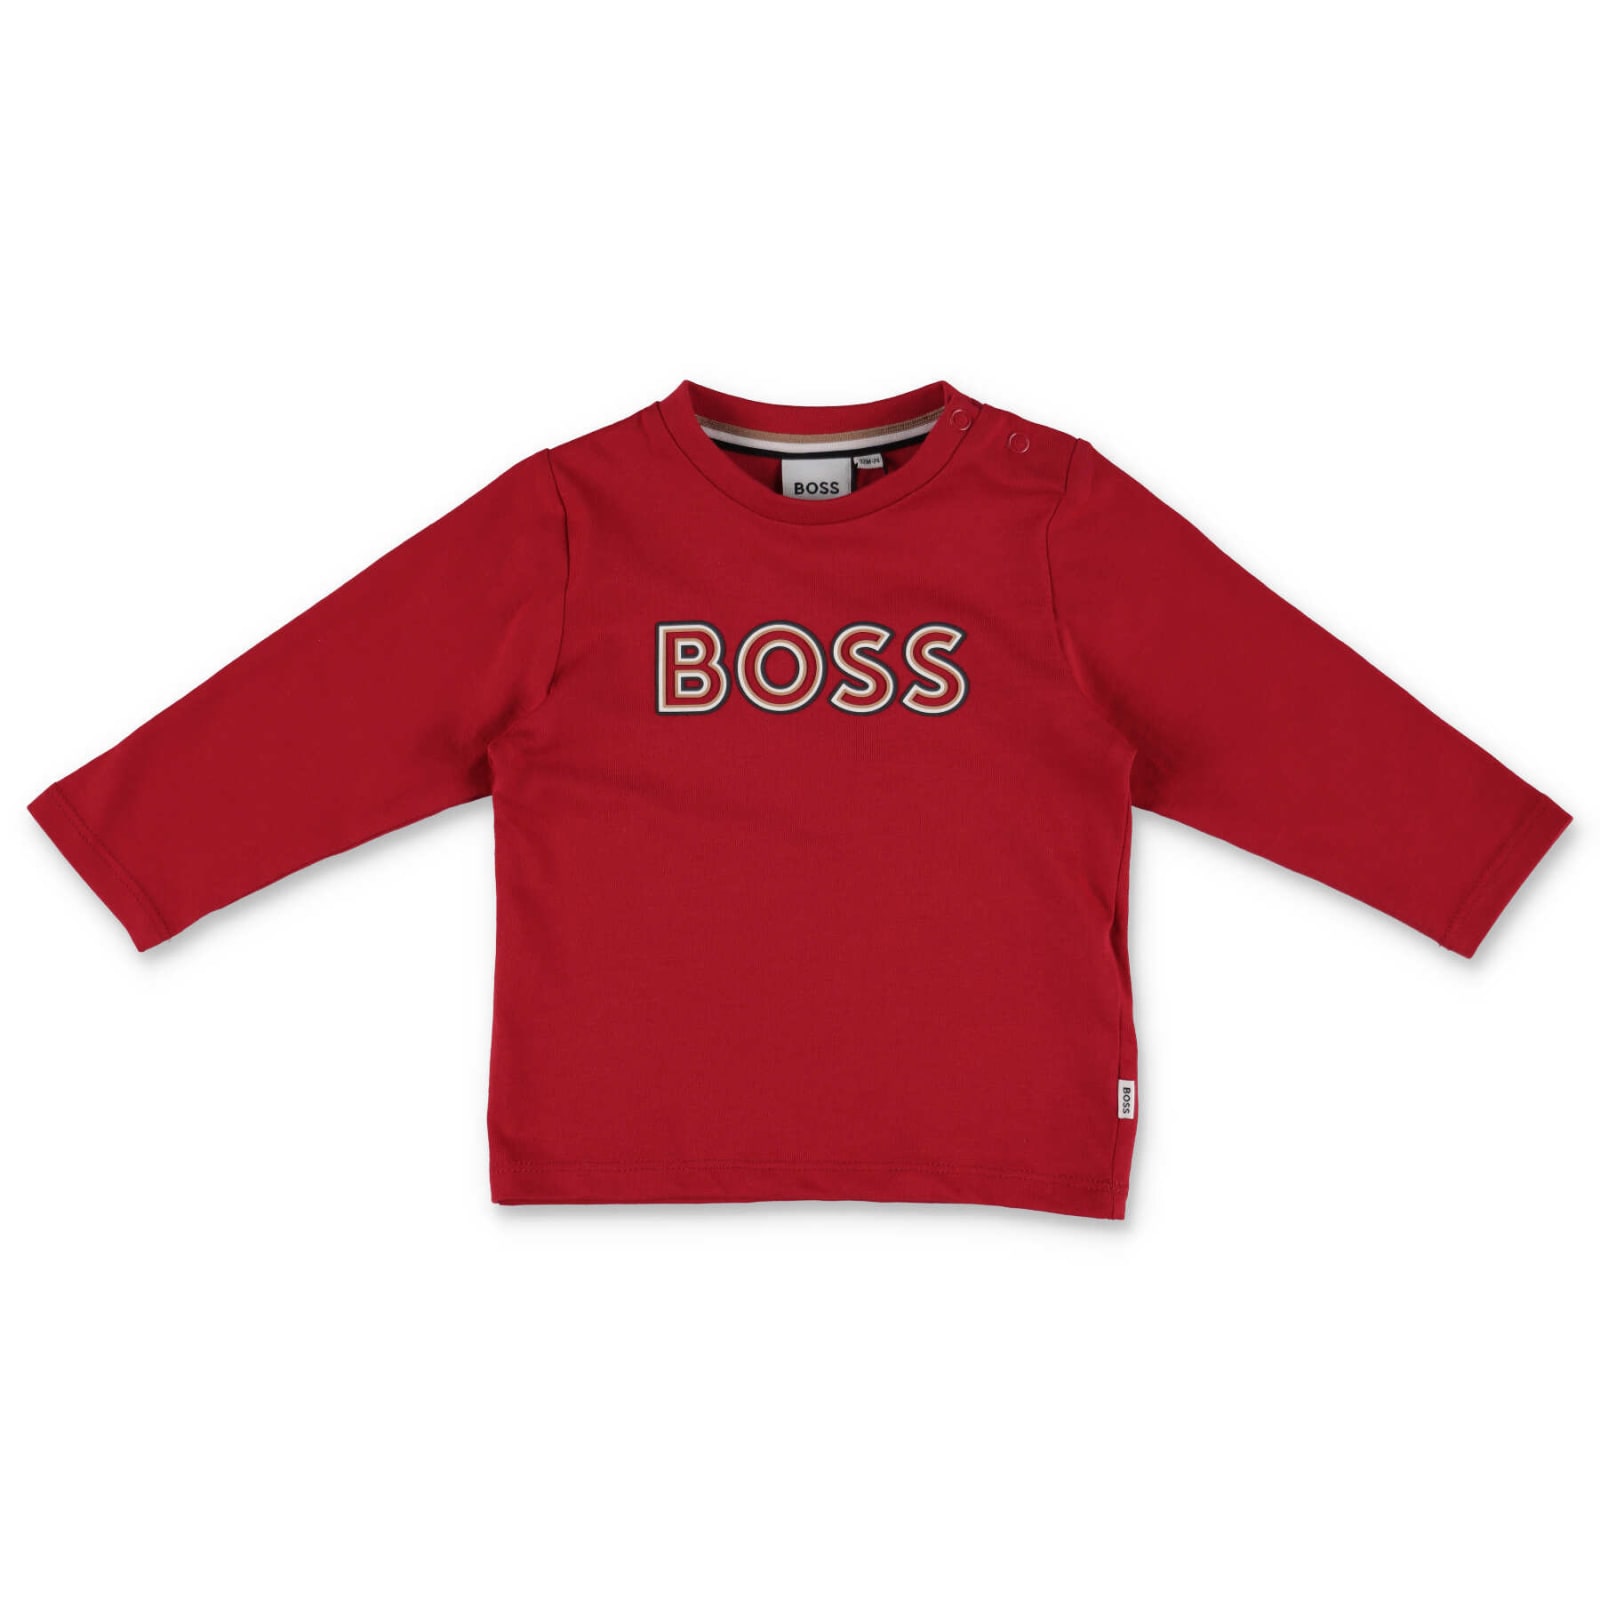 Hugo Boss T-shirt Rossa In Jersey Di Cotone